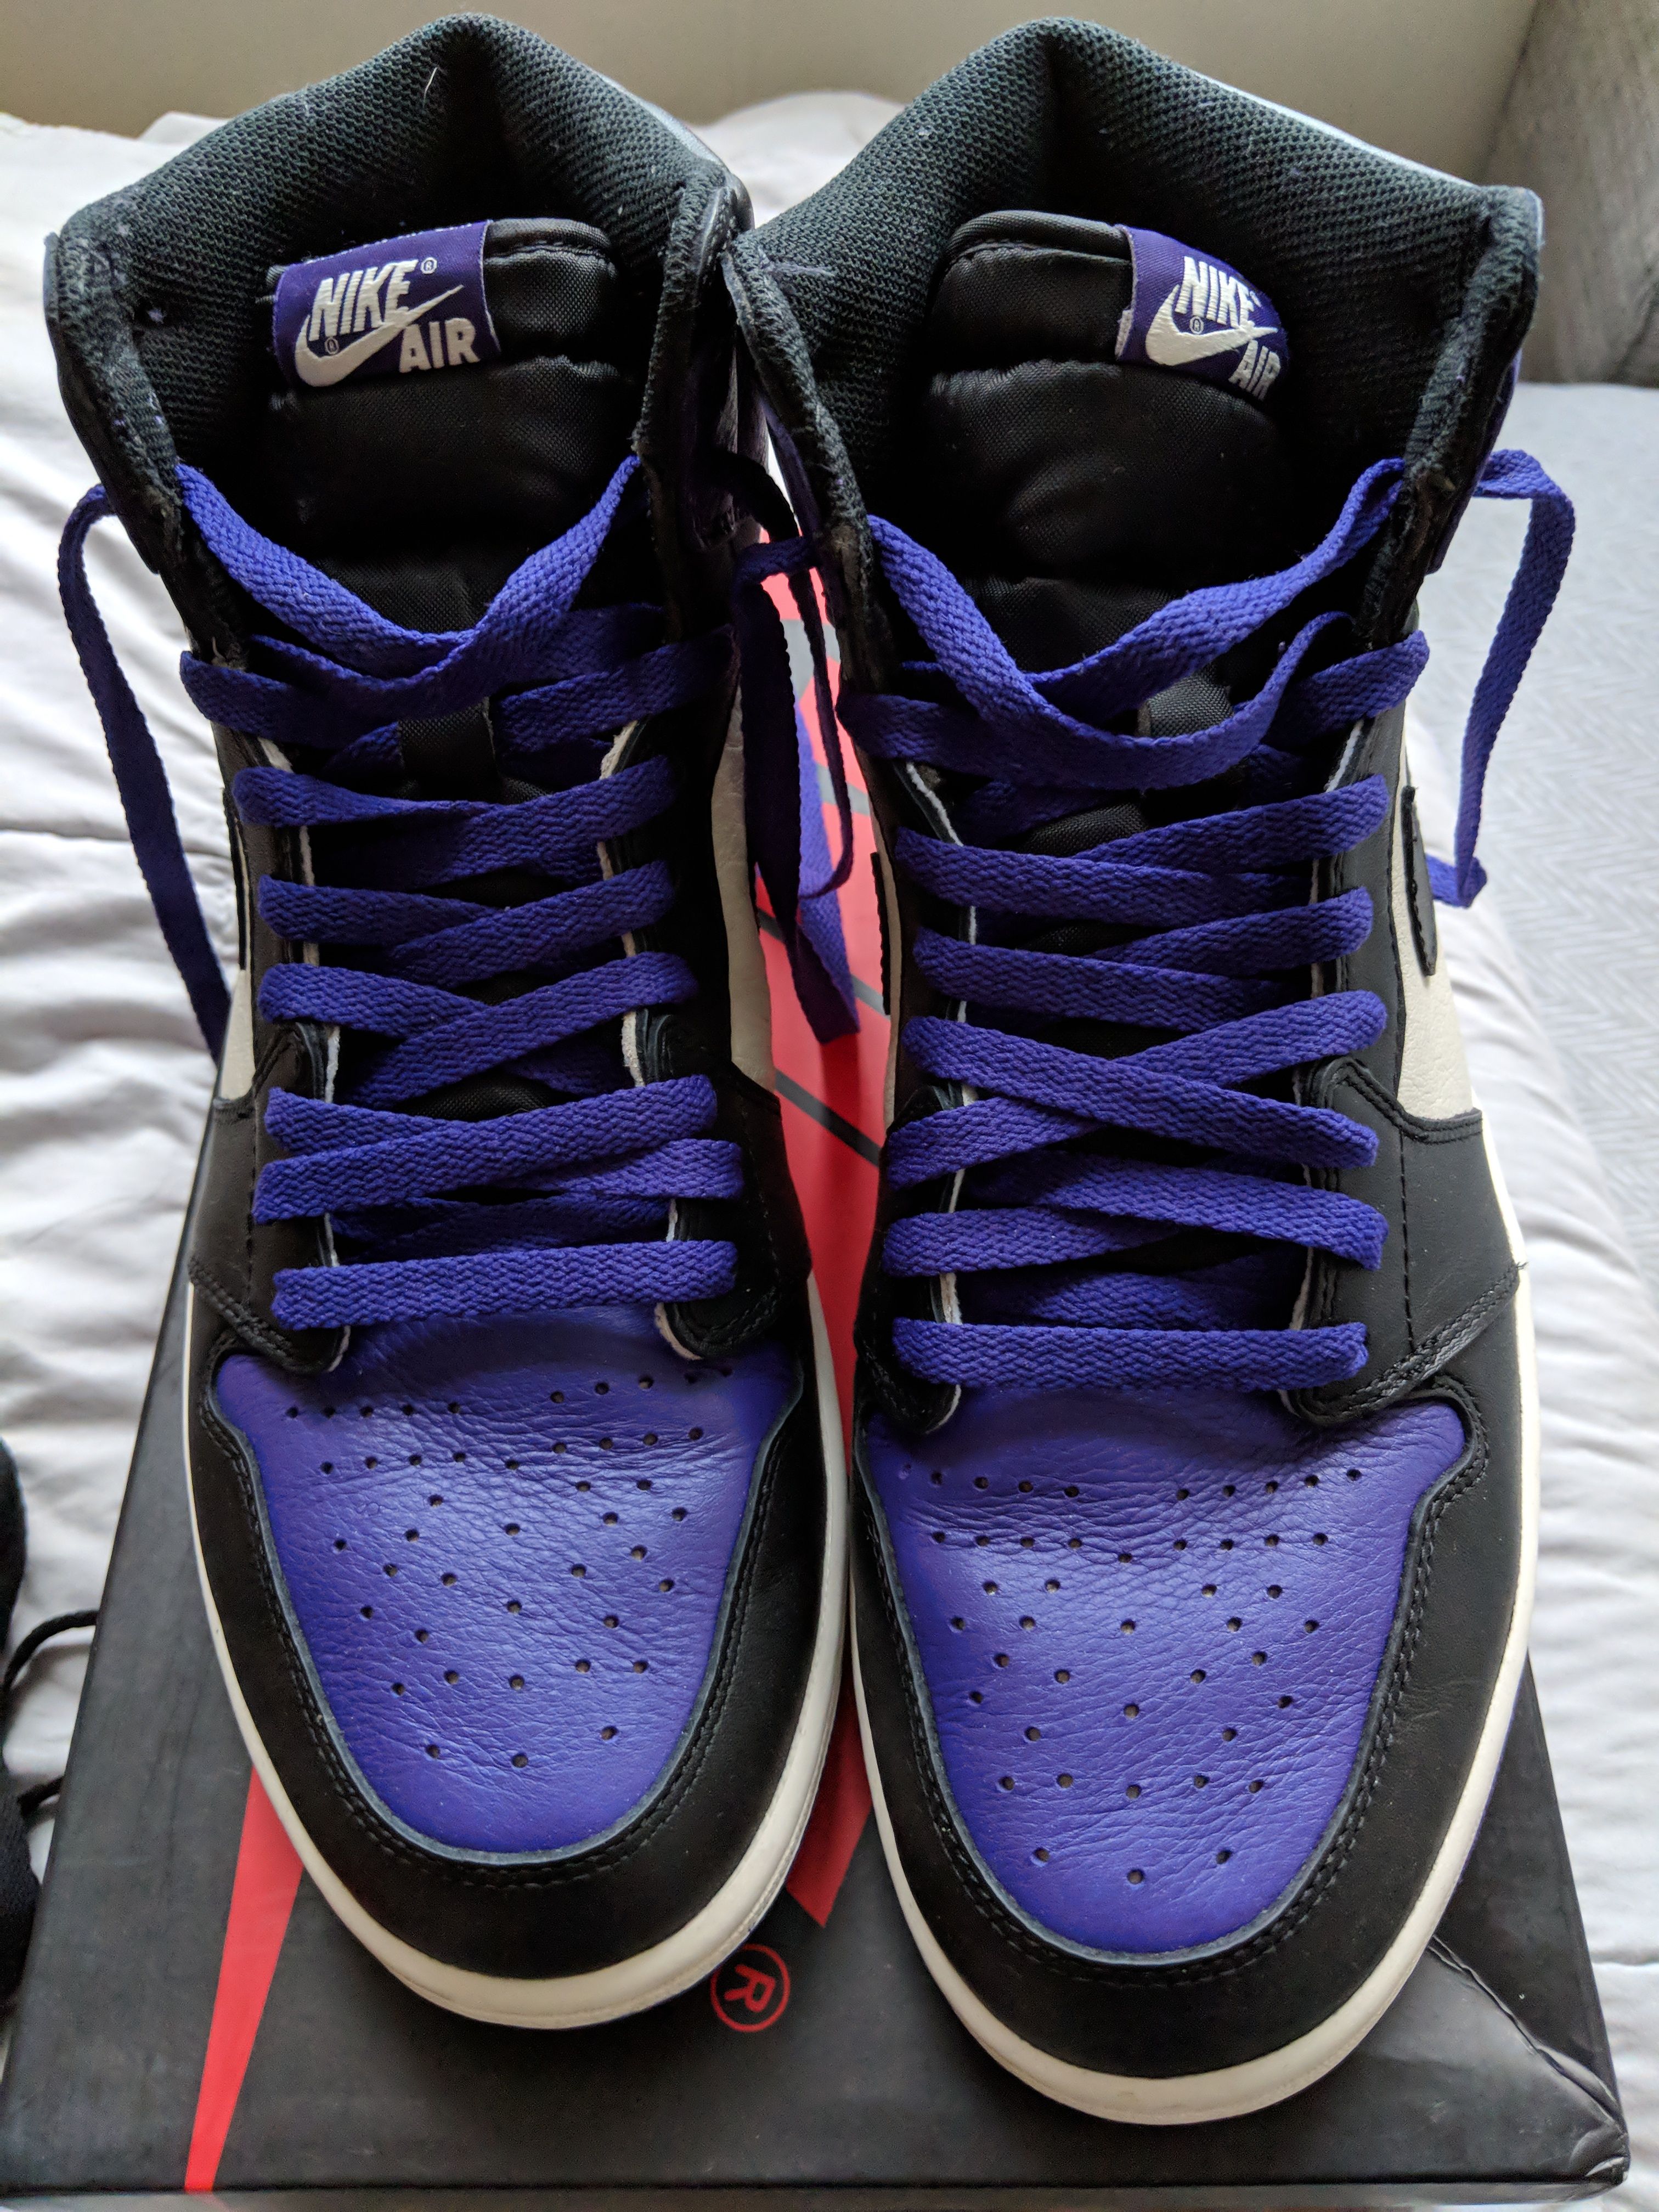 Jordan 1 Court Purple size 11